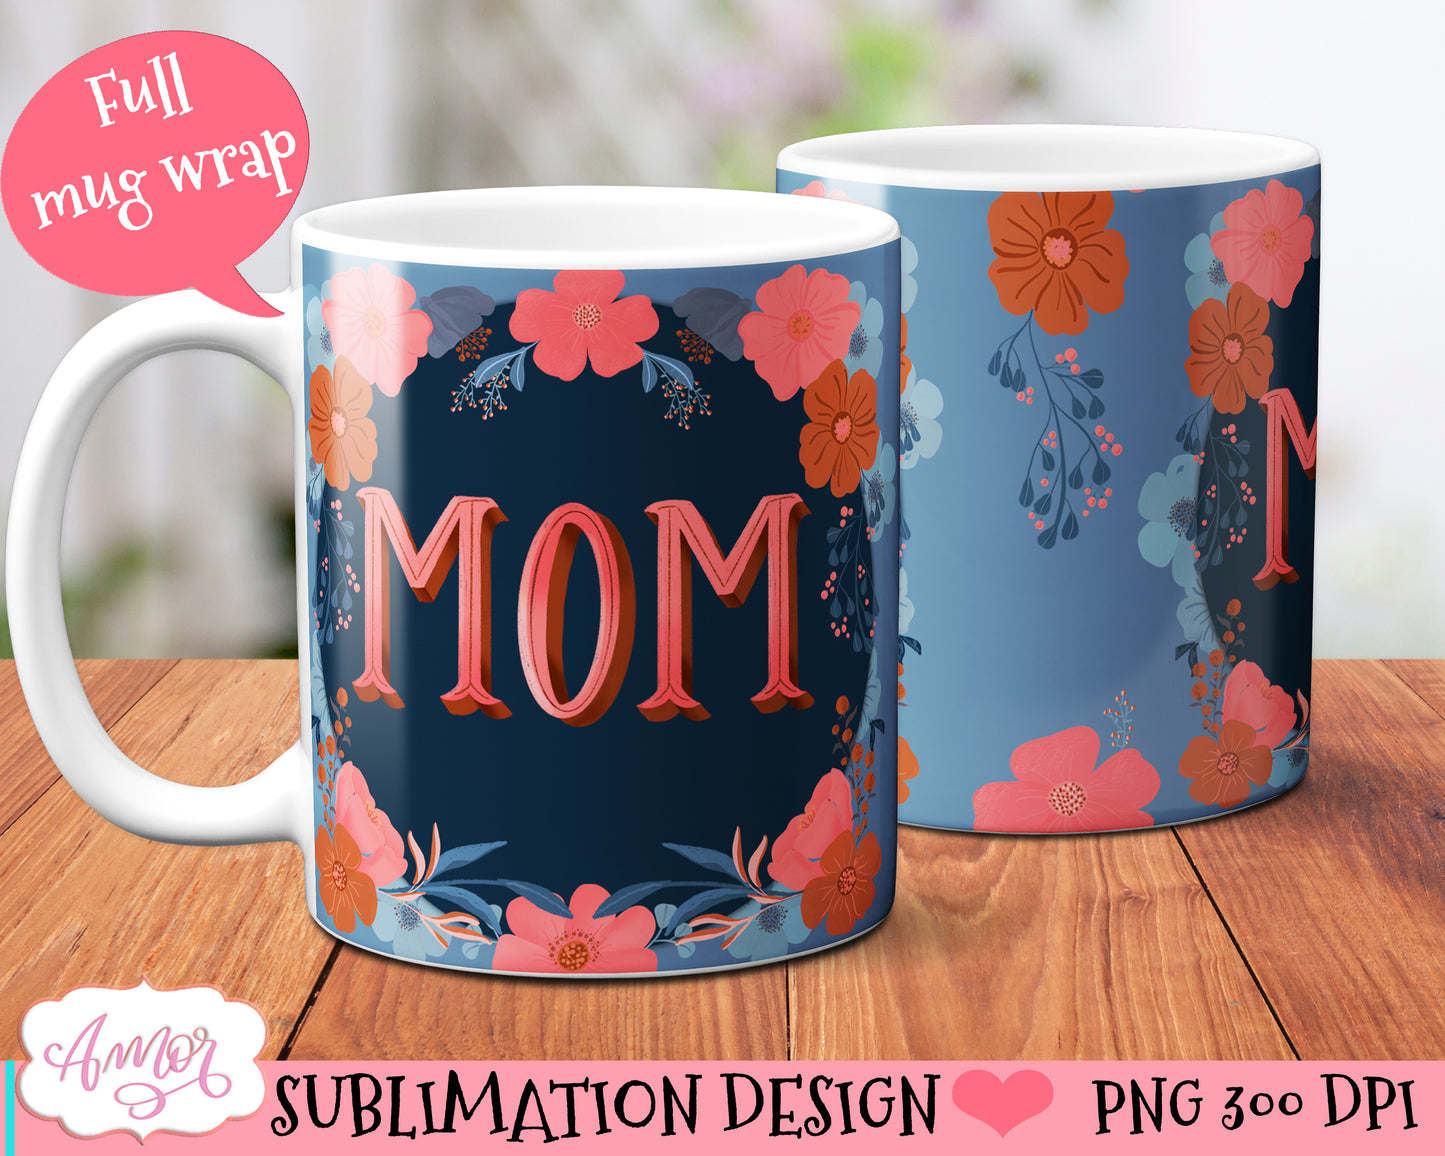 Mom mug wrap PNG | Mother's day sublimation design for mugs